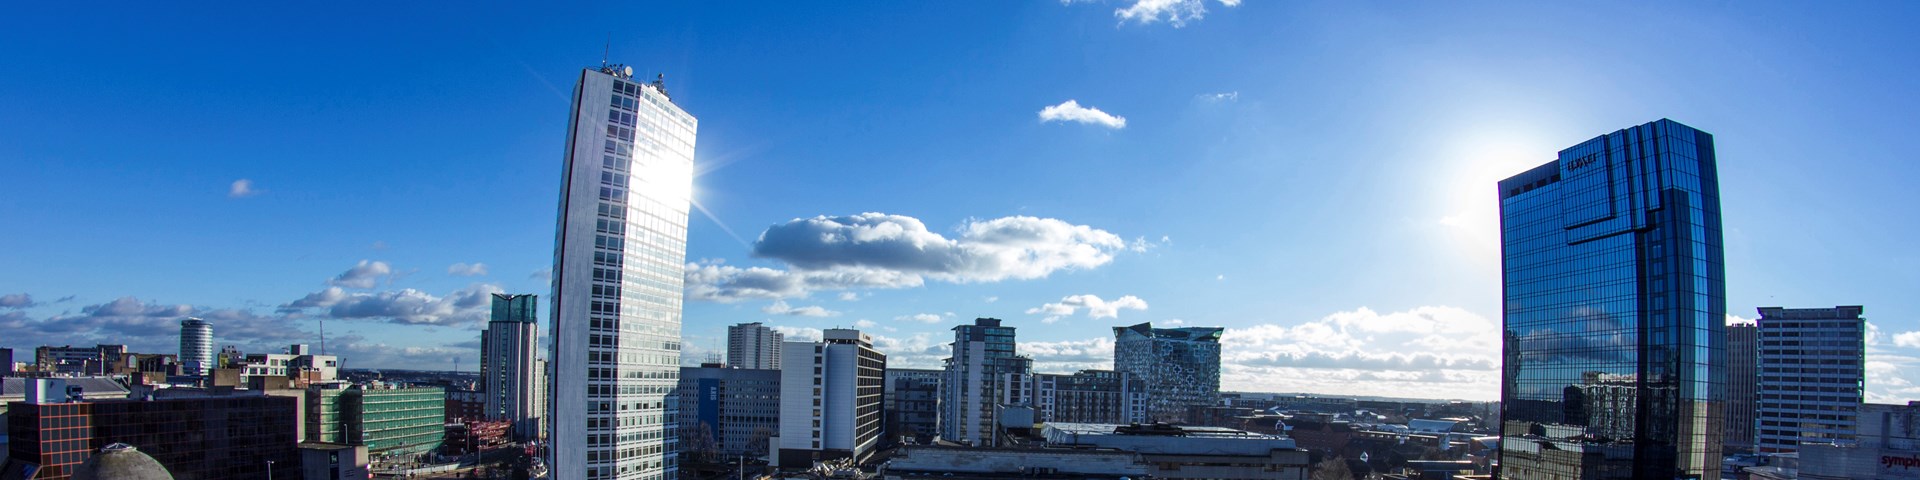 Sunny image of Birmingham city showing skyscrapers